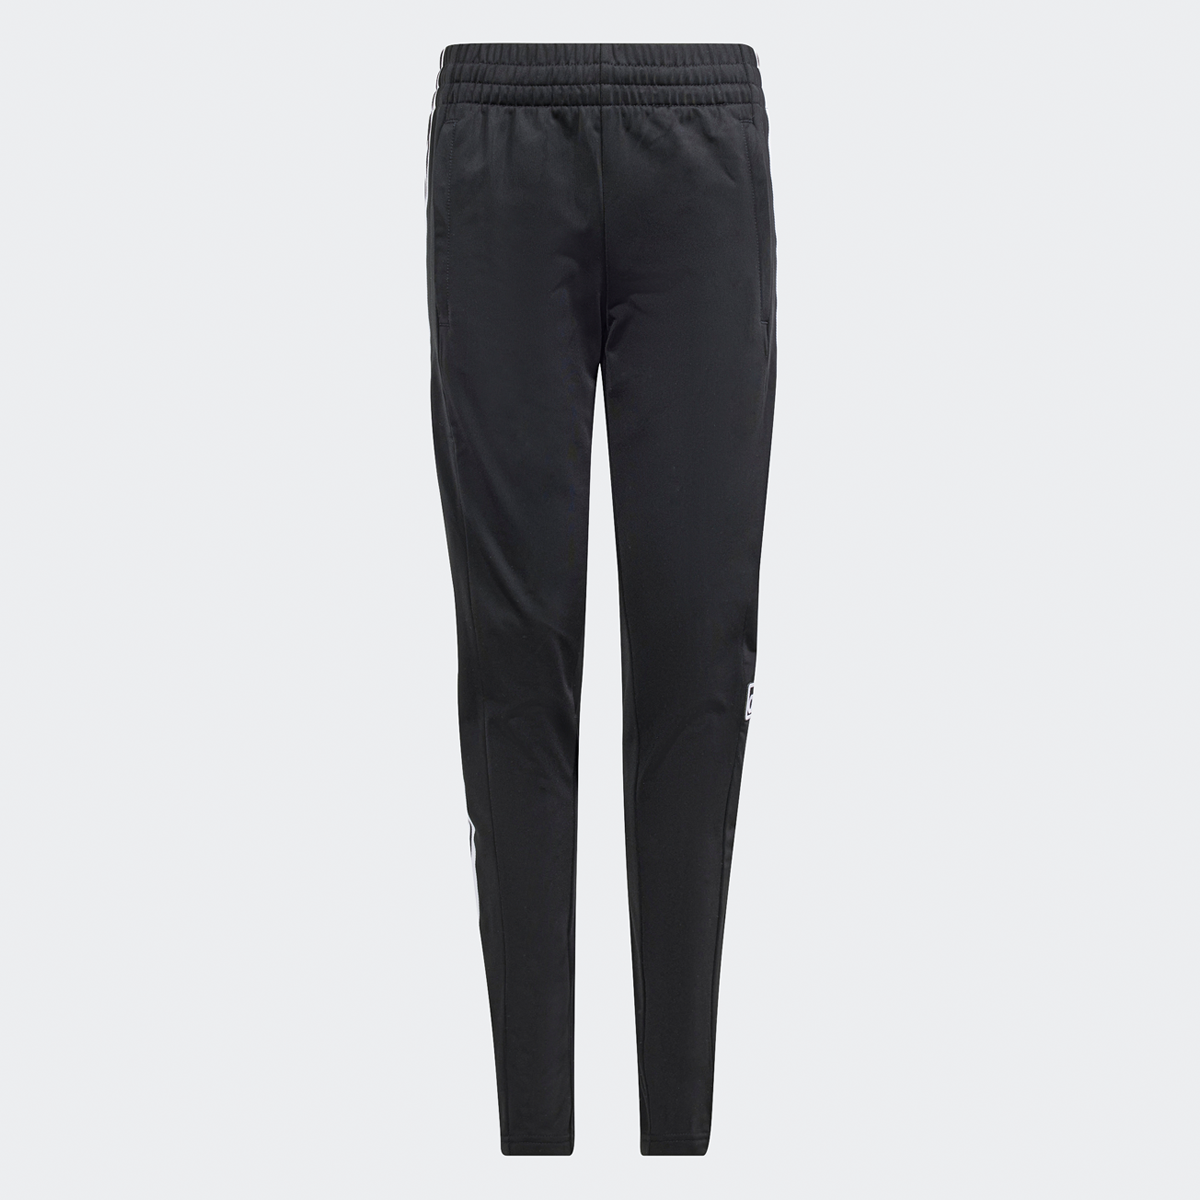 Pantalon de Survêtement adicolor Adibreak, adidas Originals, Apparel, black/white, taille: 140